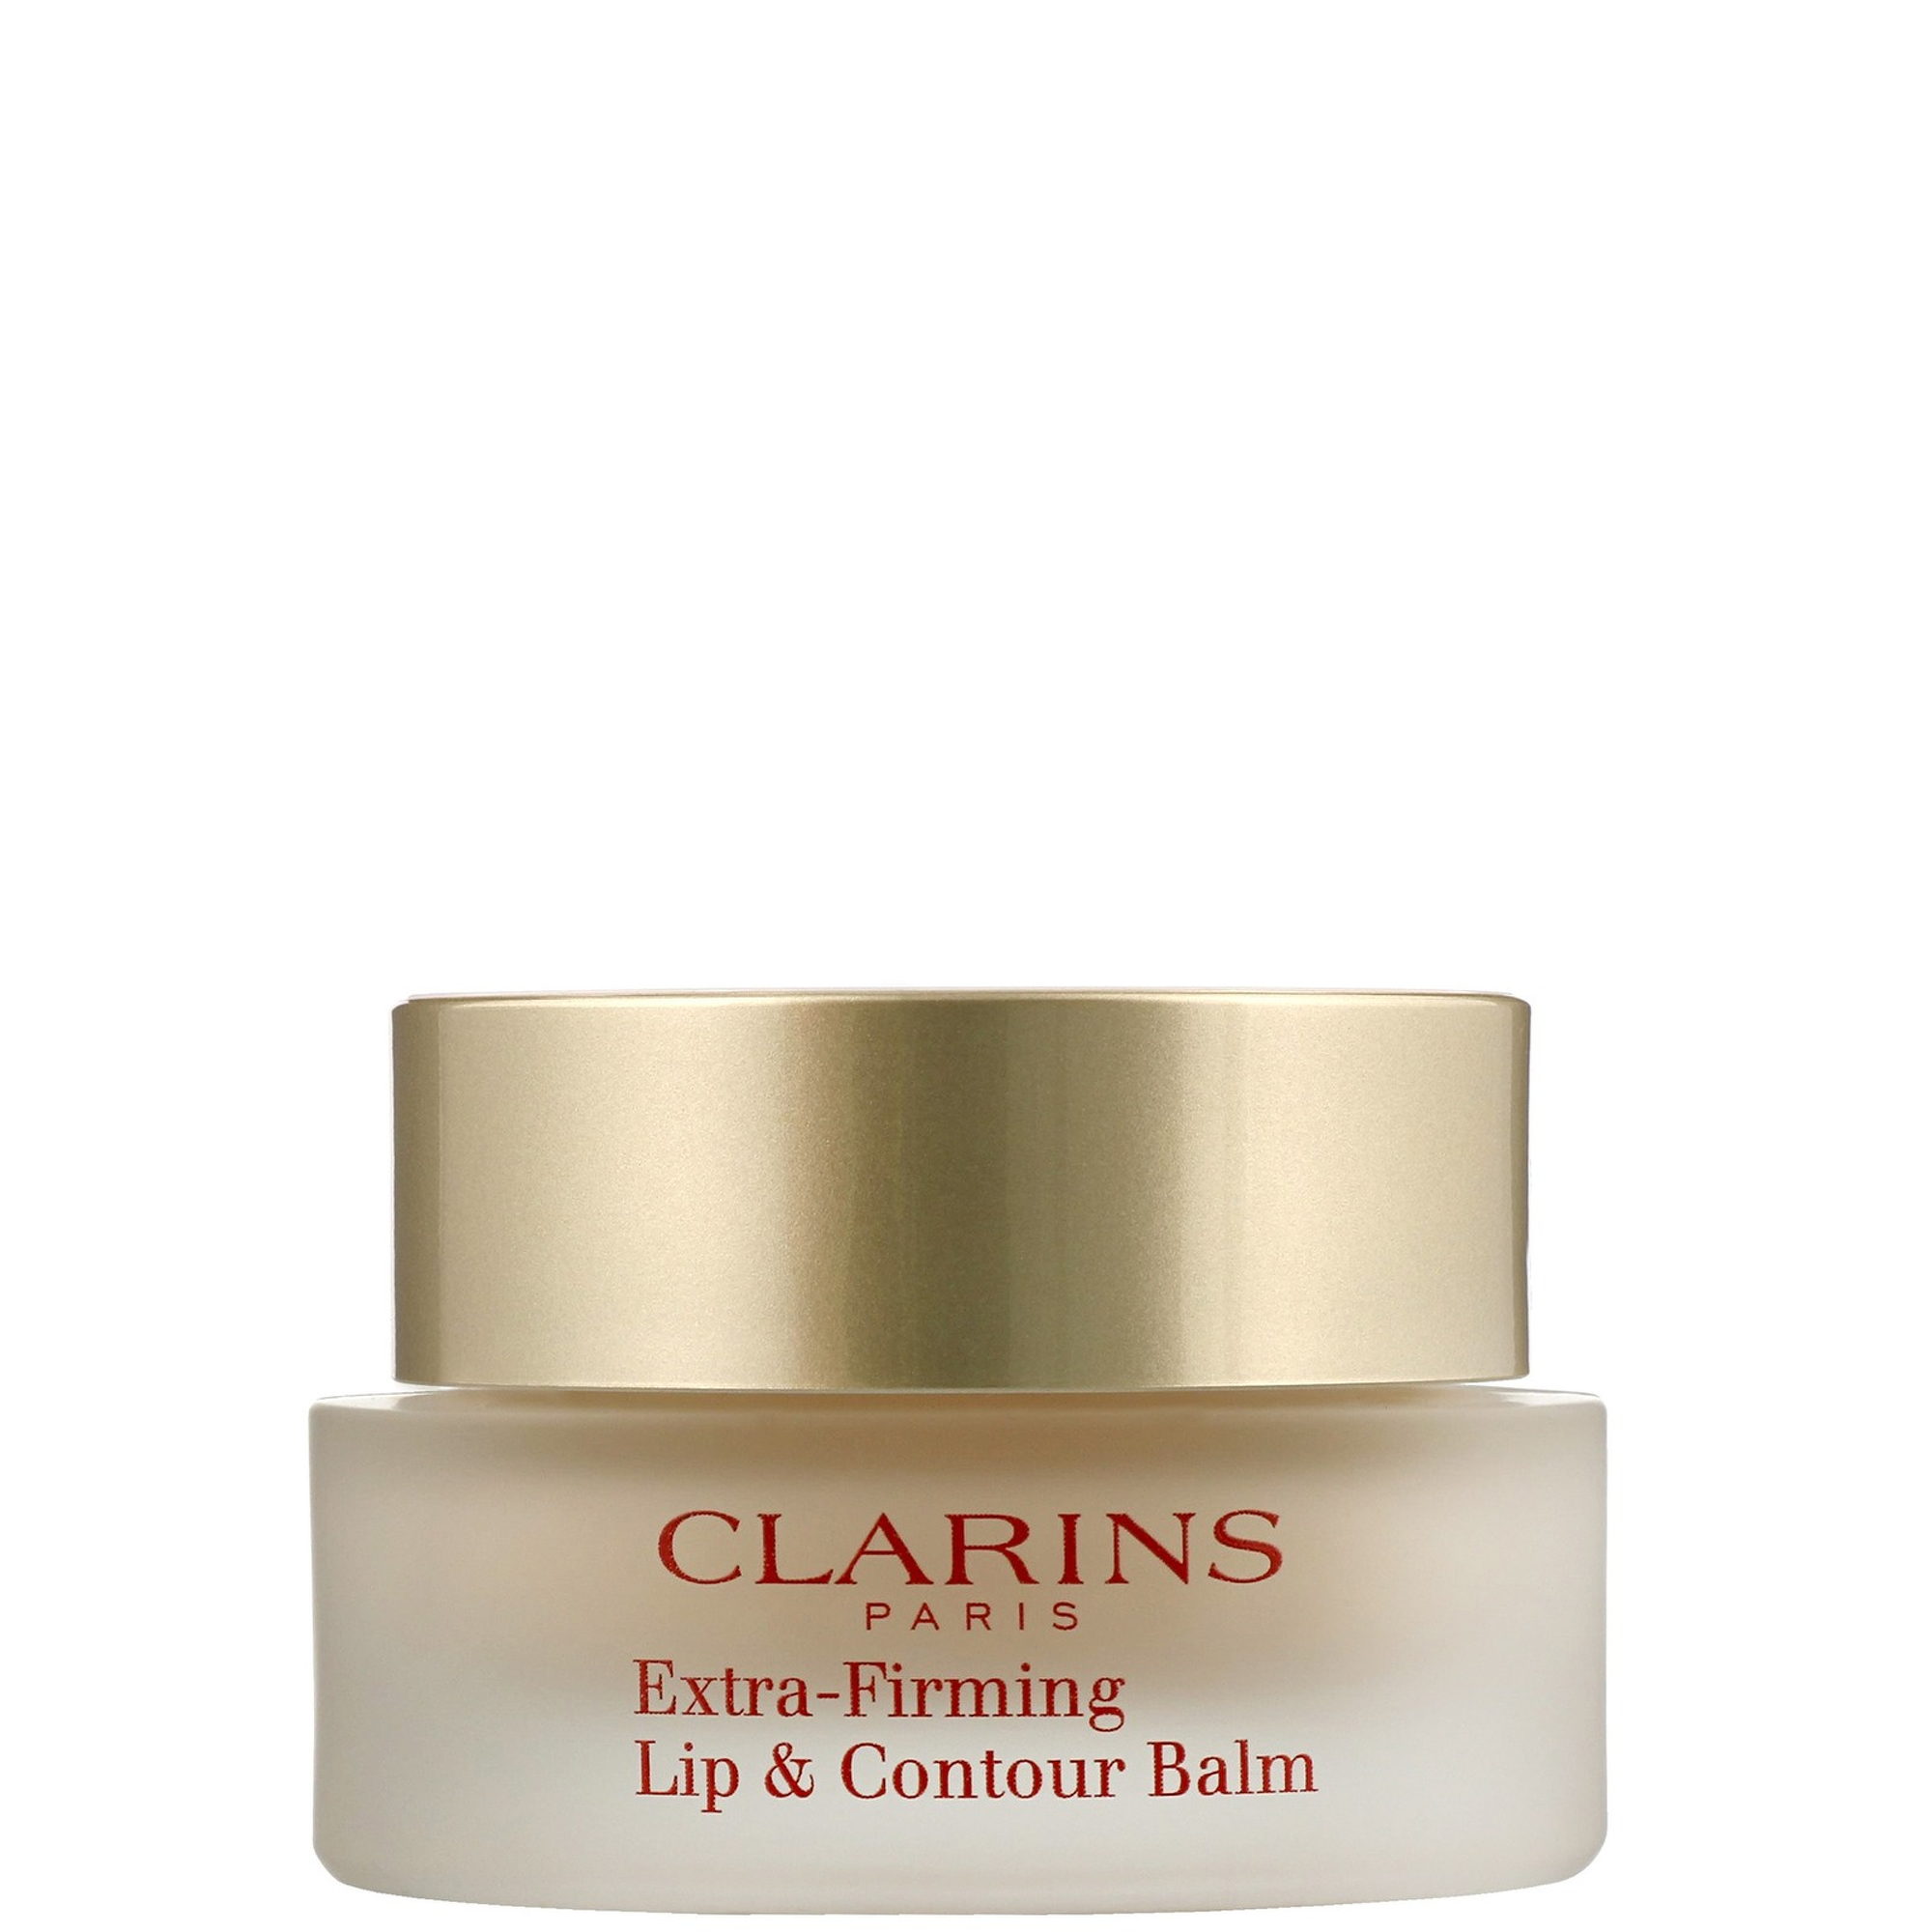 Image of Clarins Extra-Firming Lip & Contour Balm 15ml / 0.5 oz.